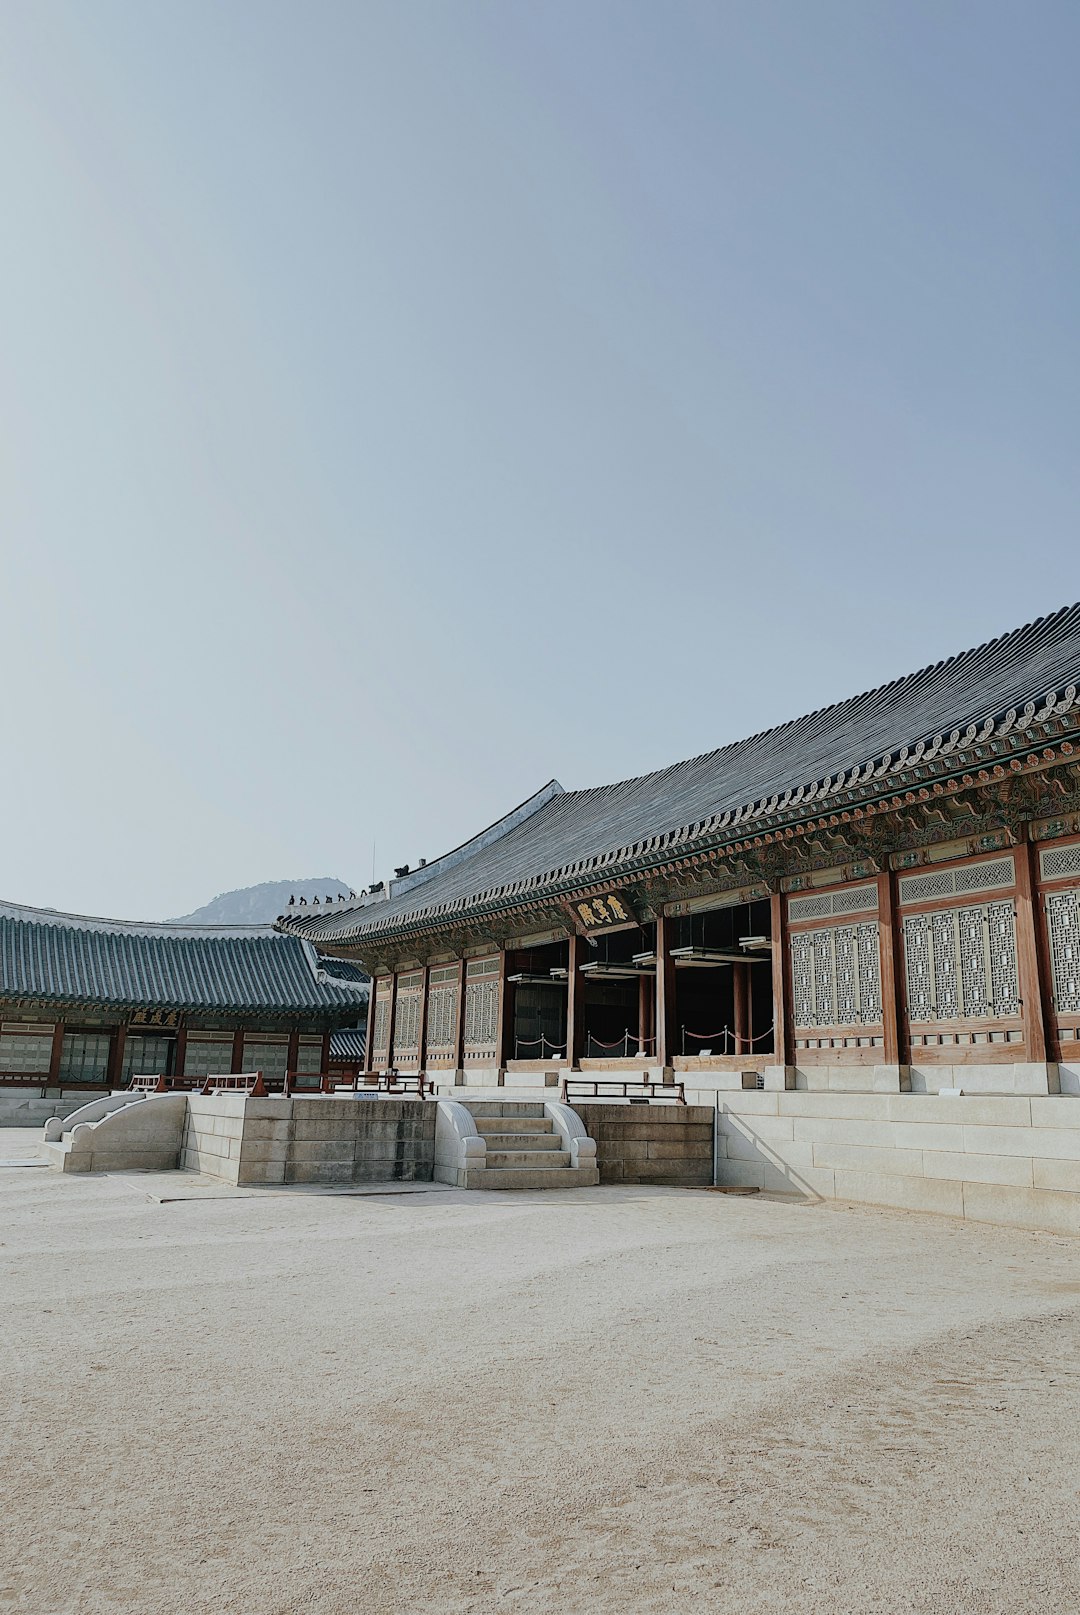 Gyeongbokgung Palace - From Courtyard, South Korea